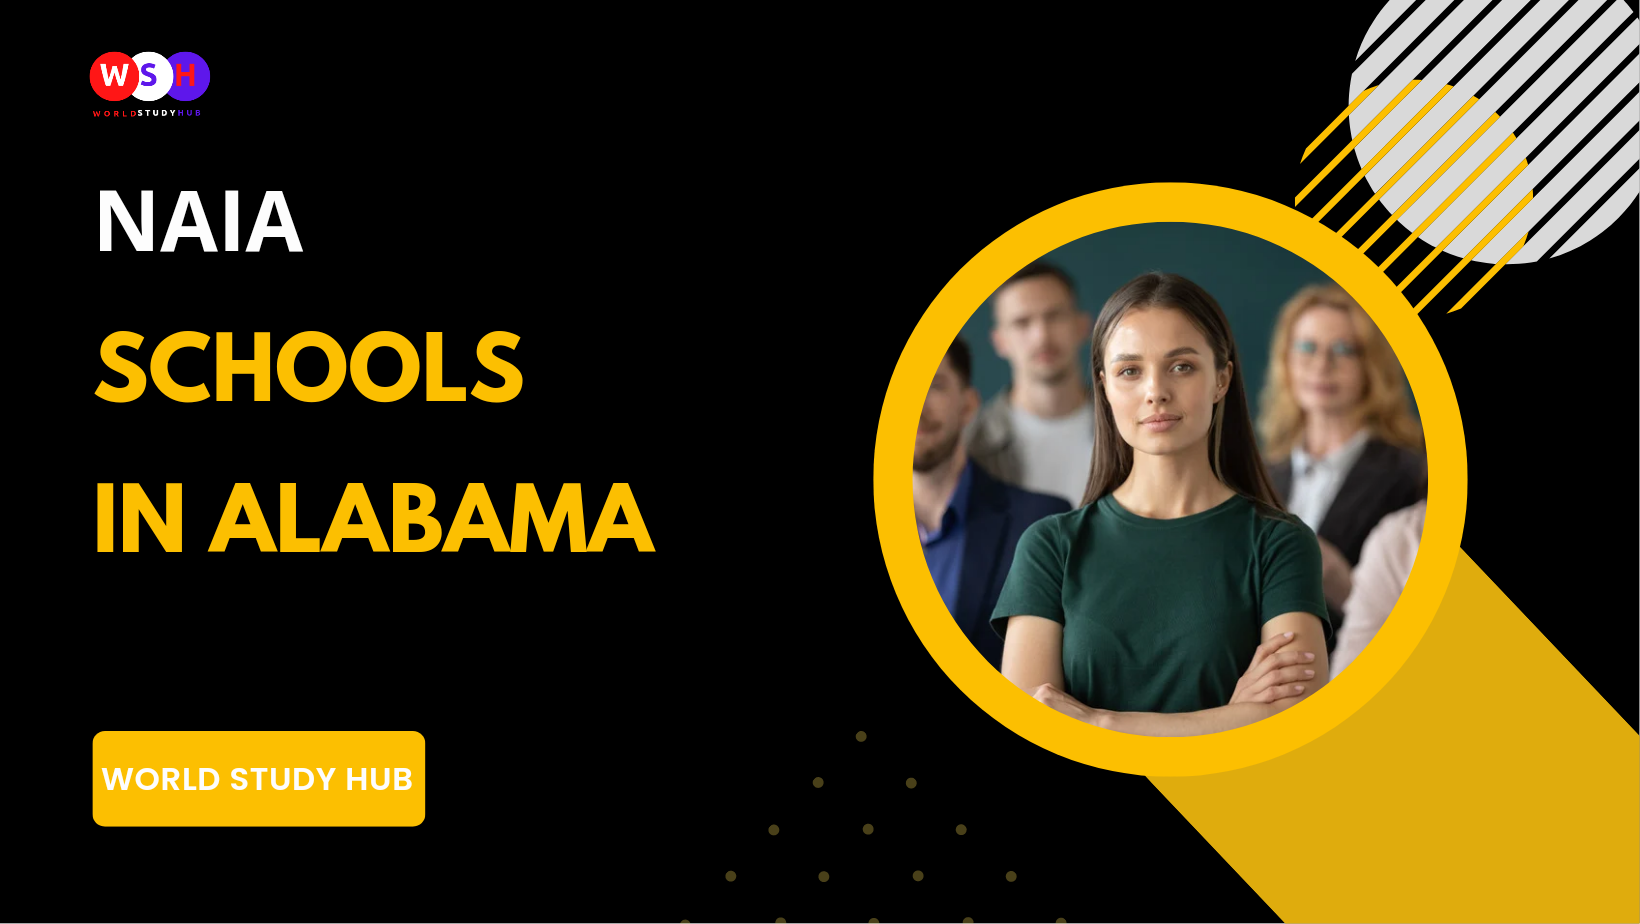 NAIA Schools in Alabama